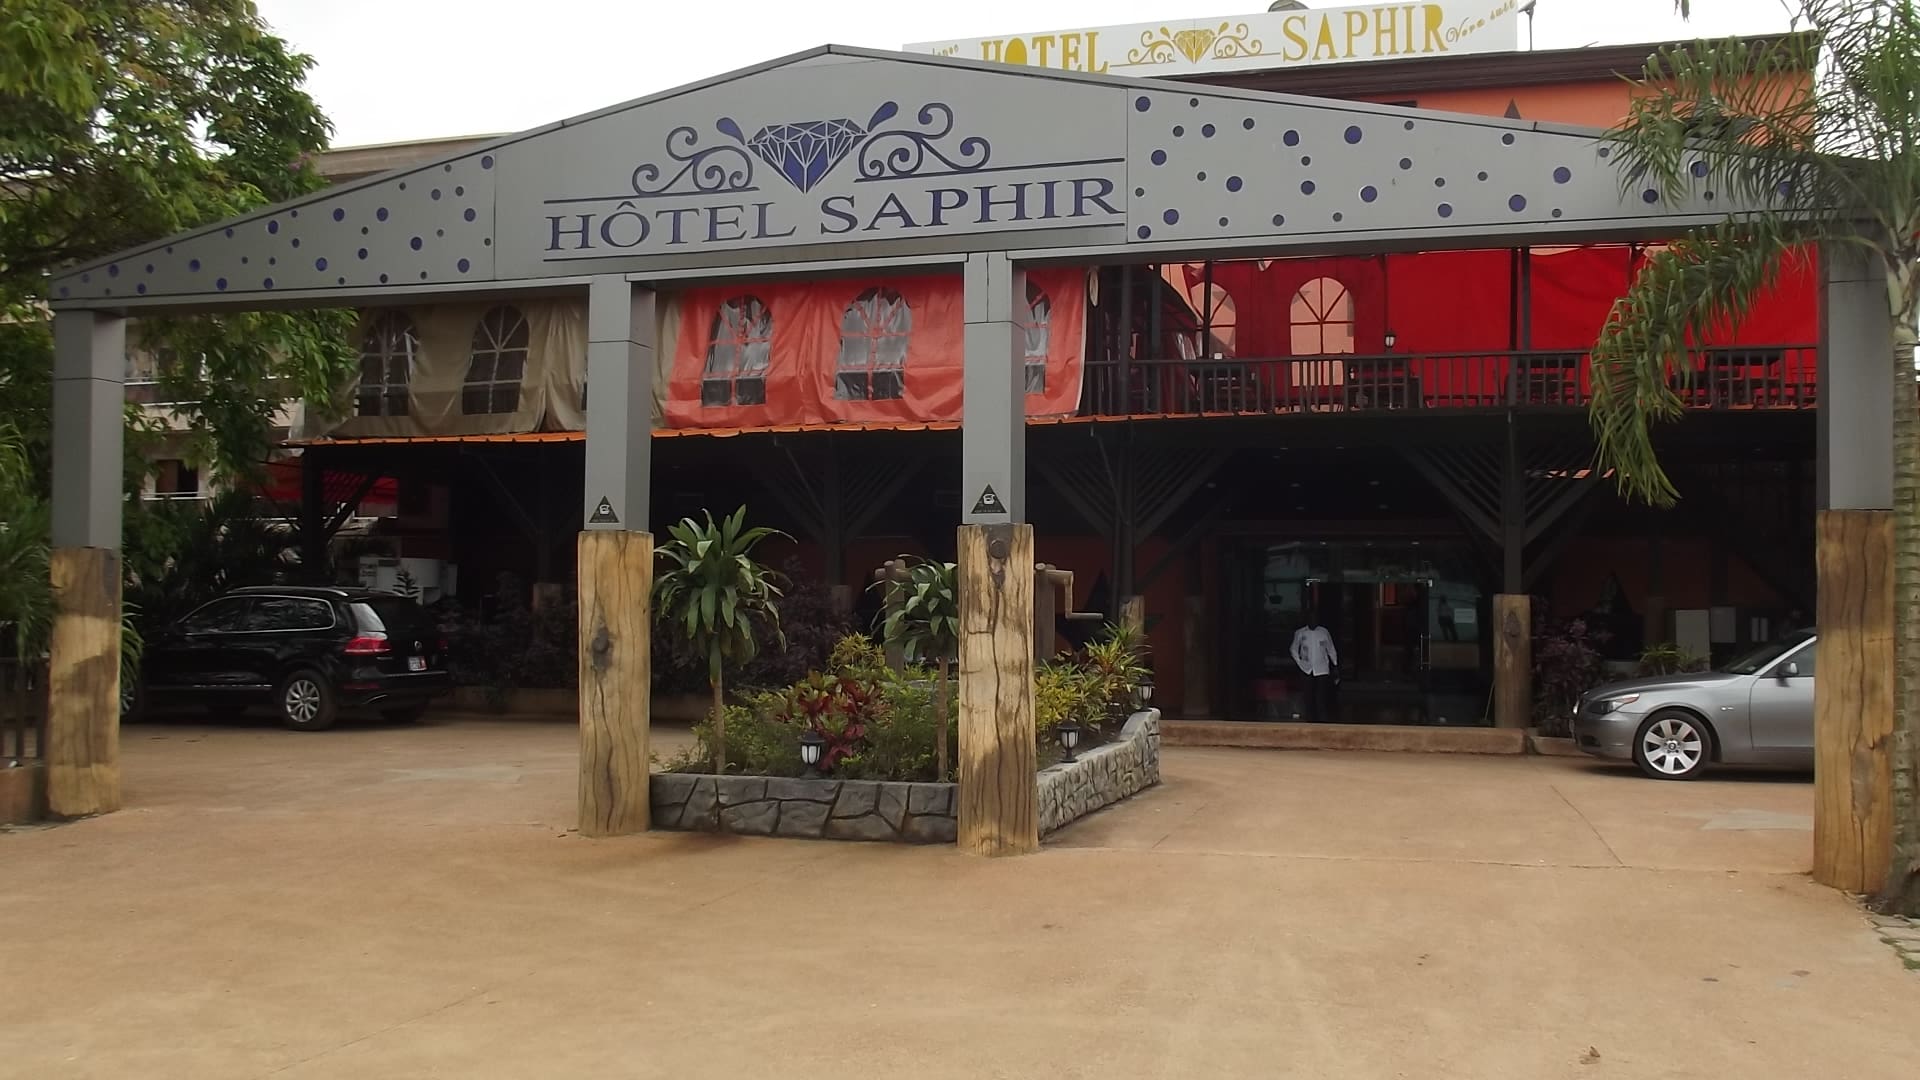 Hotel Saphir